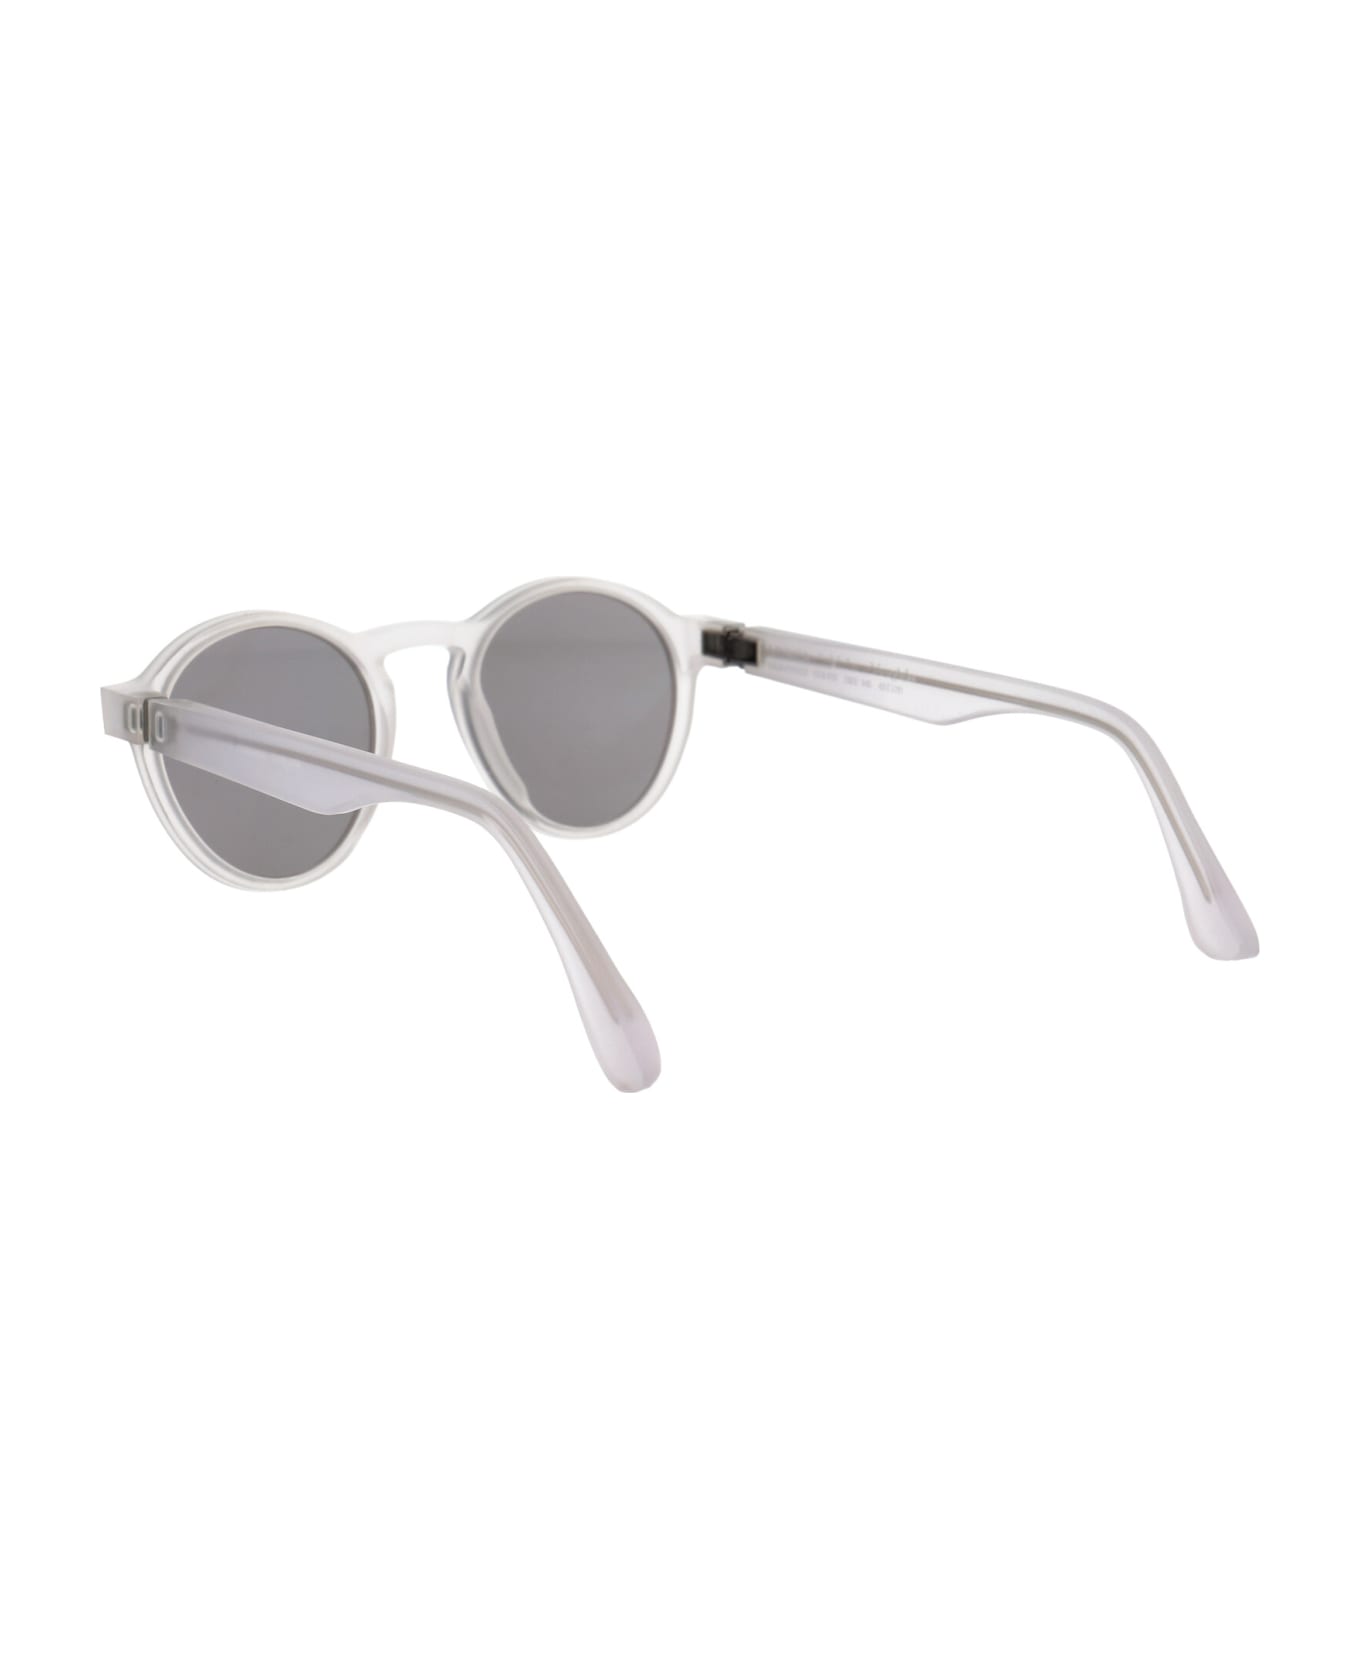 Mykita Mmraw002 Sunglasses - 817 Raw Coconut Water Warmgrey Flash